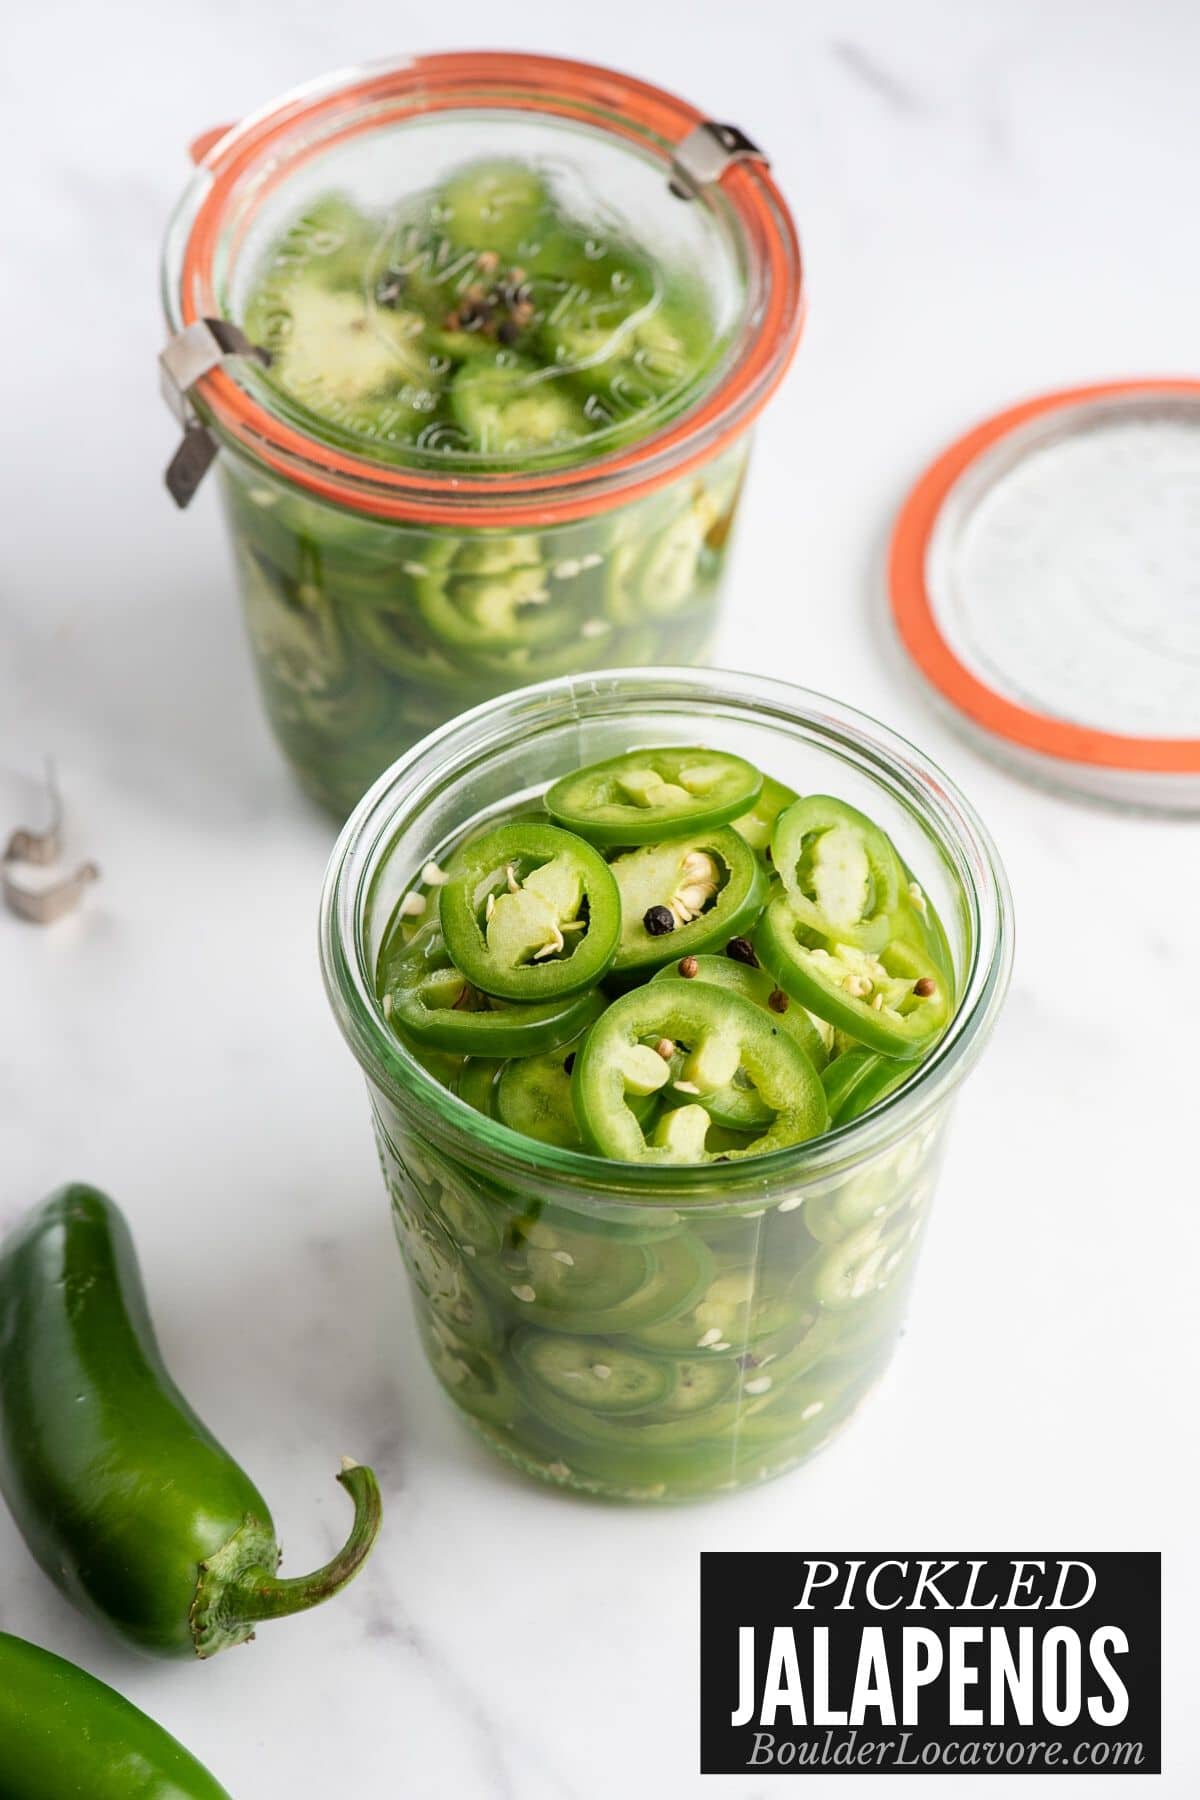 Pickled Jalapenos in a glass jar